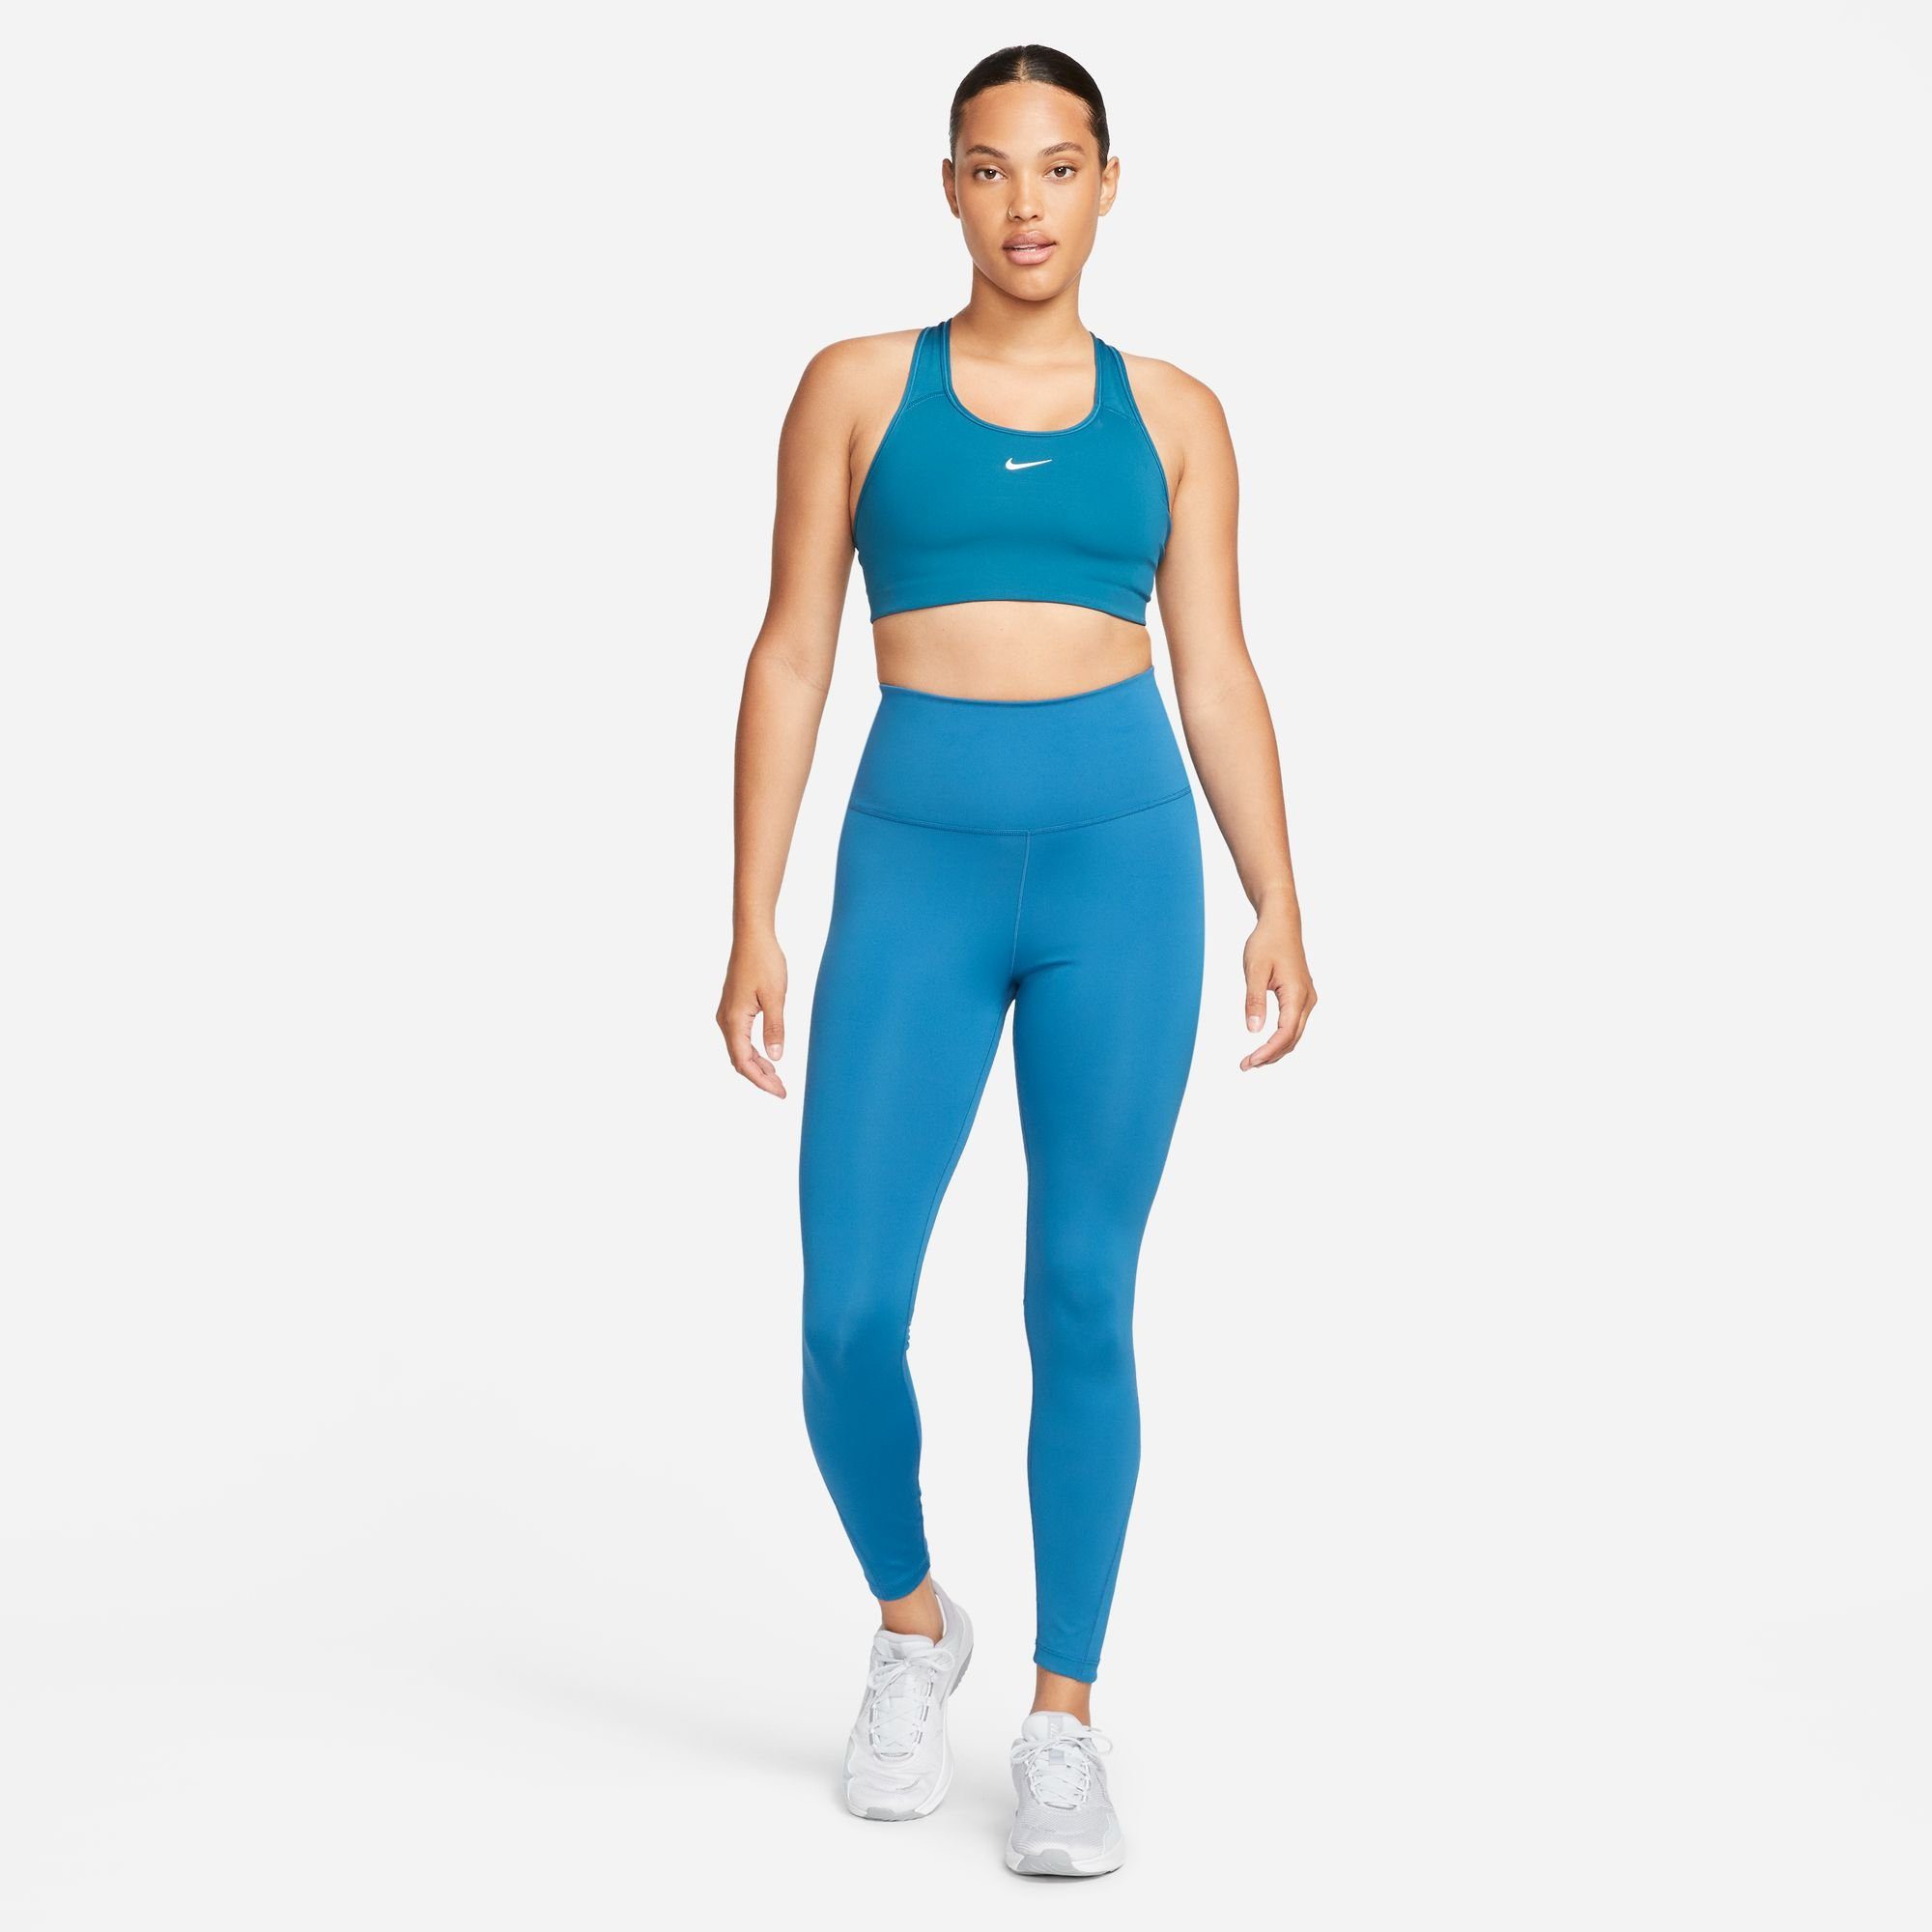 INDUSTRIAL / BLUE/WHITE LEGGINGS WOMEN'S Nike Trainingstights ONE HIGH-WAISTED